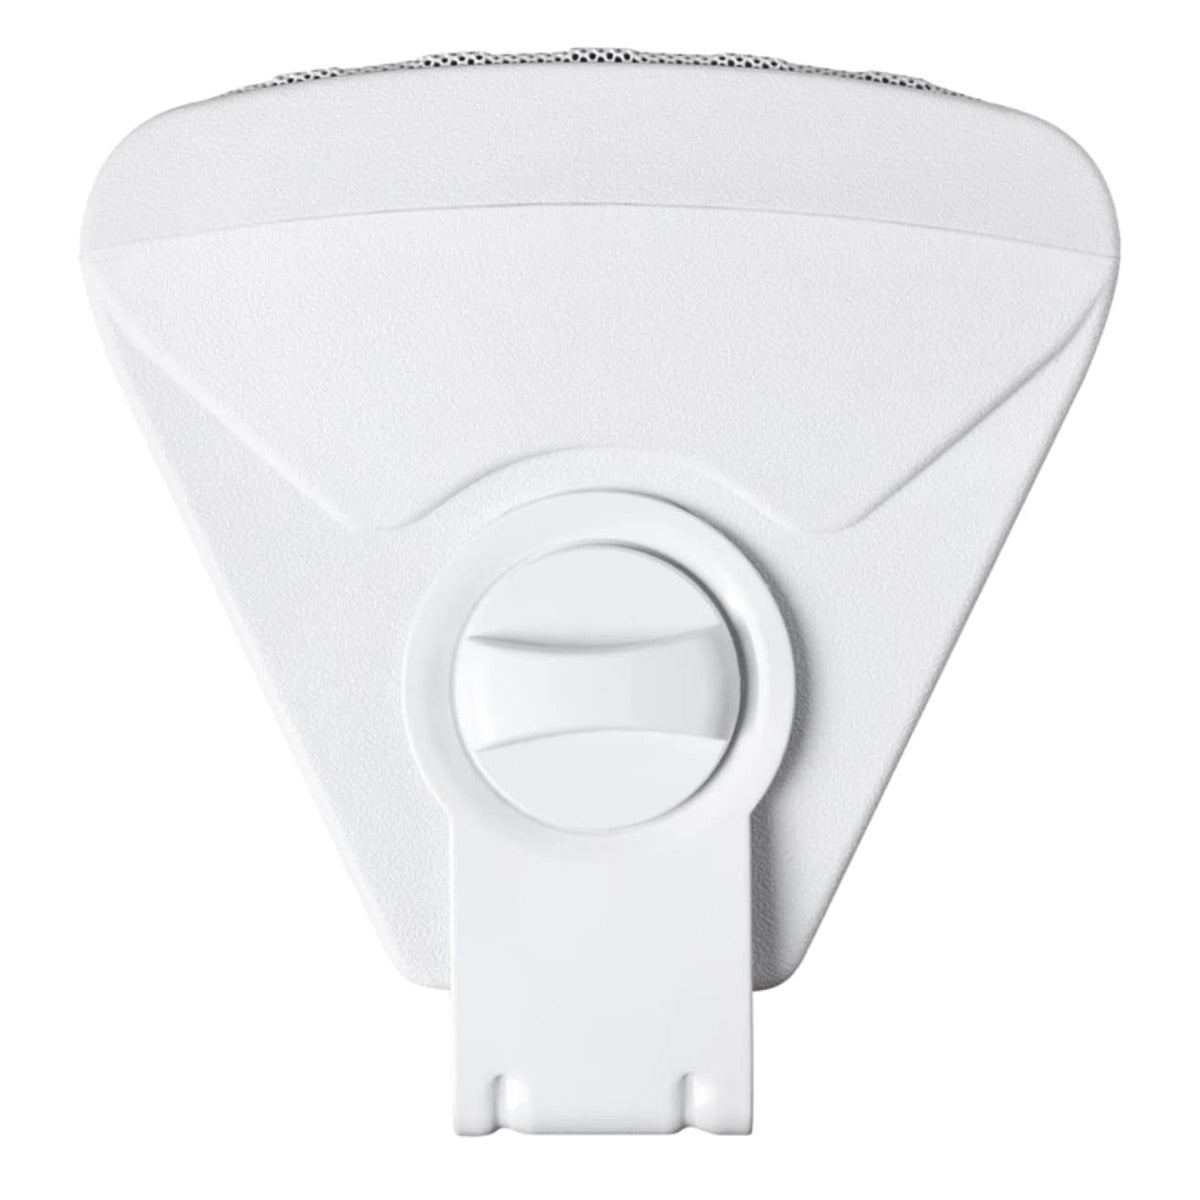 iHome iHSI-W525BT-PR-WHT 5.25" Waterproof Mountable Outdoor Bluetooth Speakers - Pair (White)